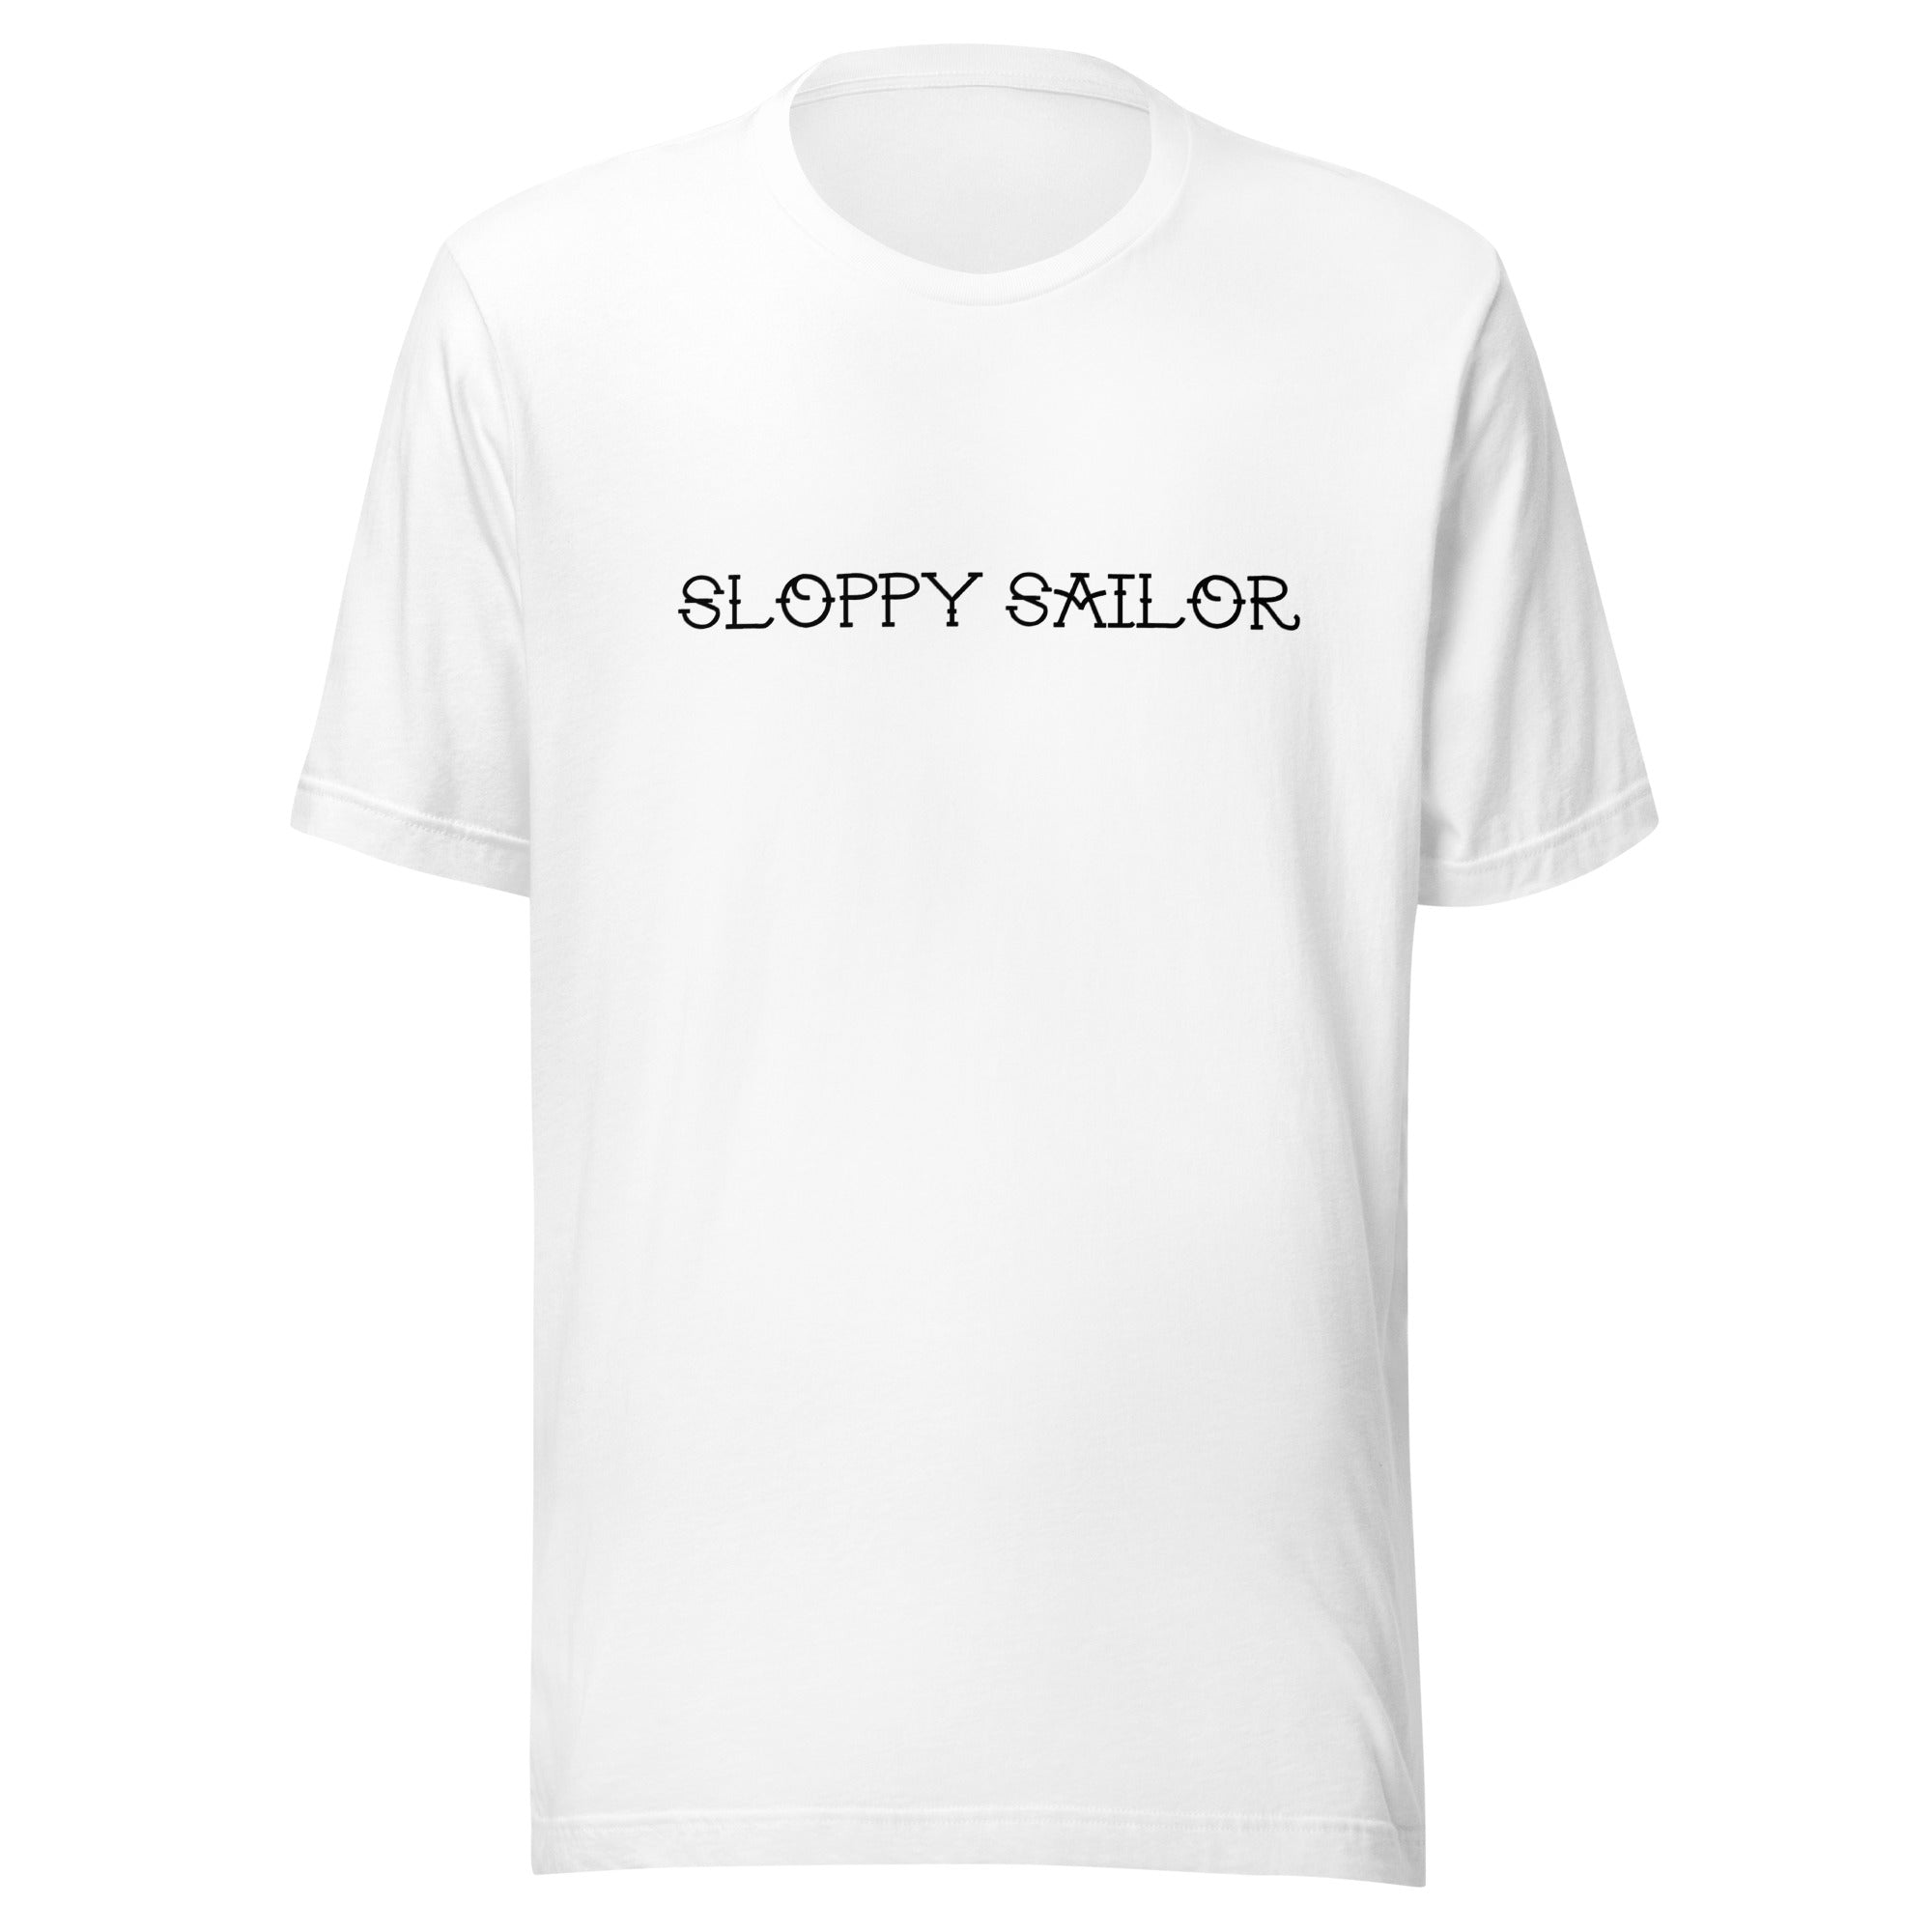 SLOPPY SAILOR - Premium-T-Shirt